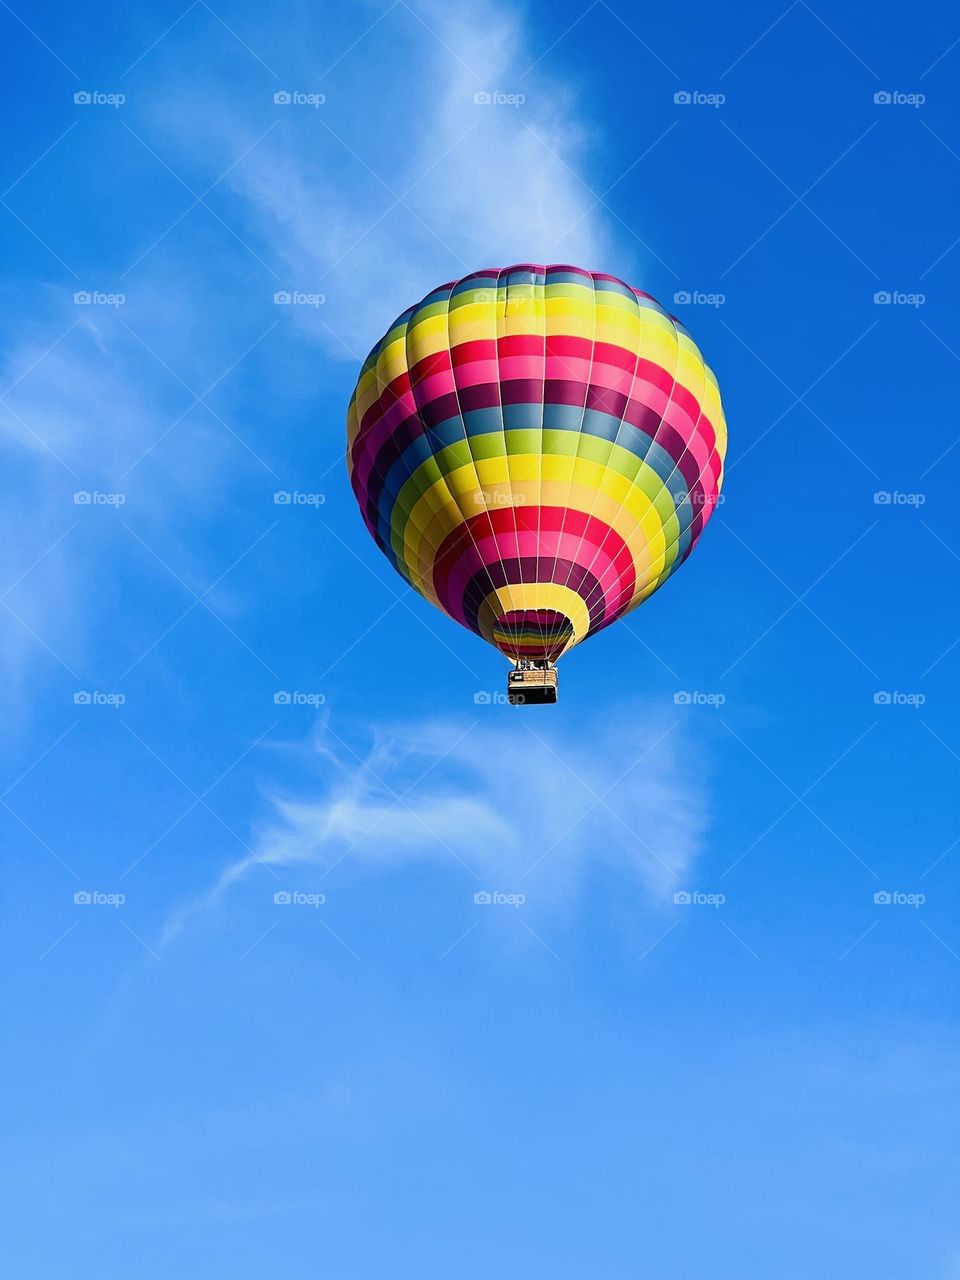 Multicolored hot air balloon